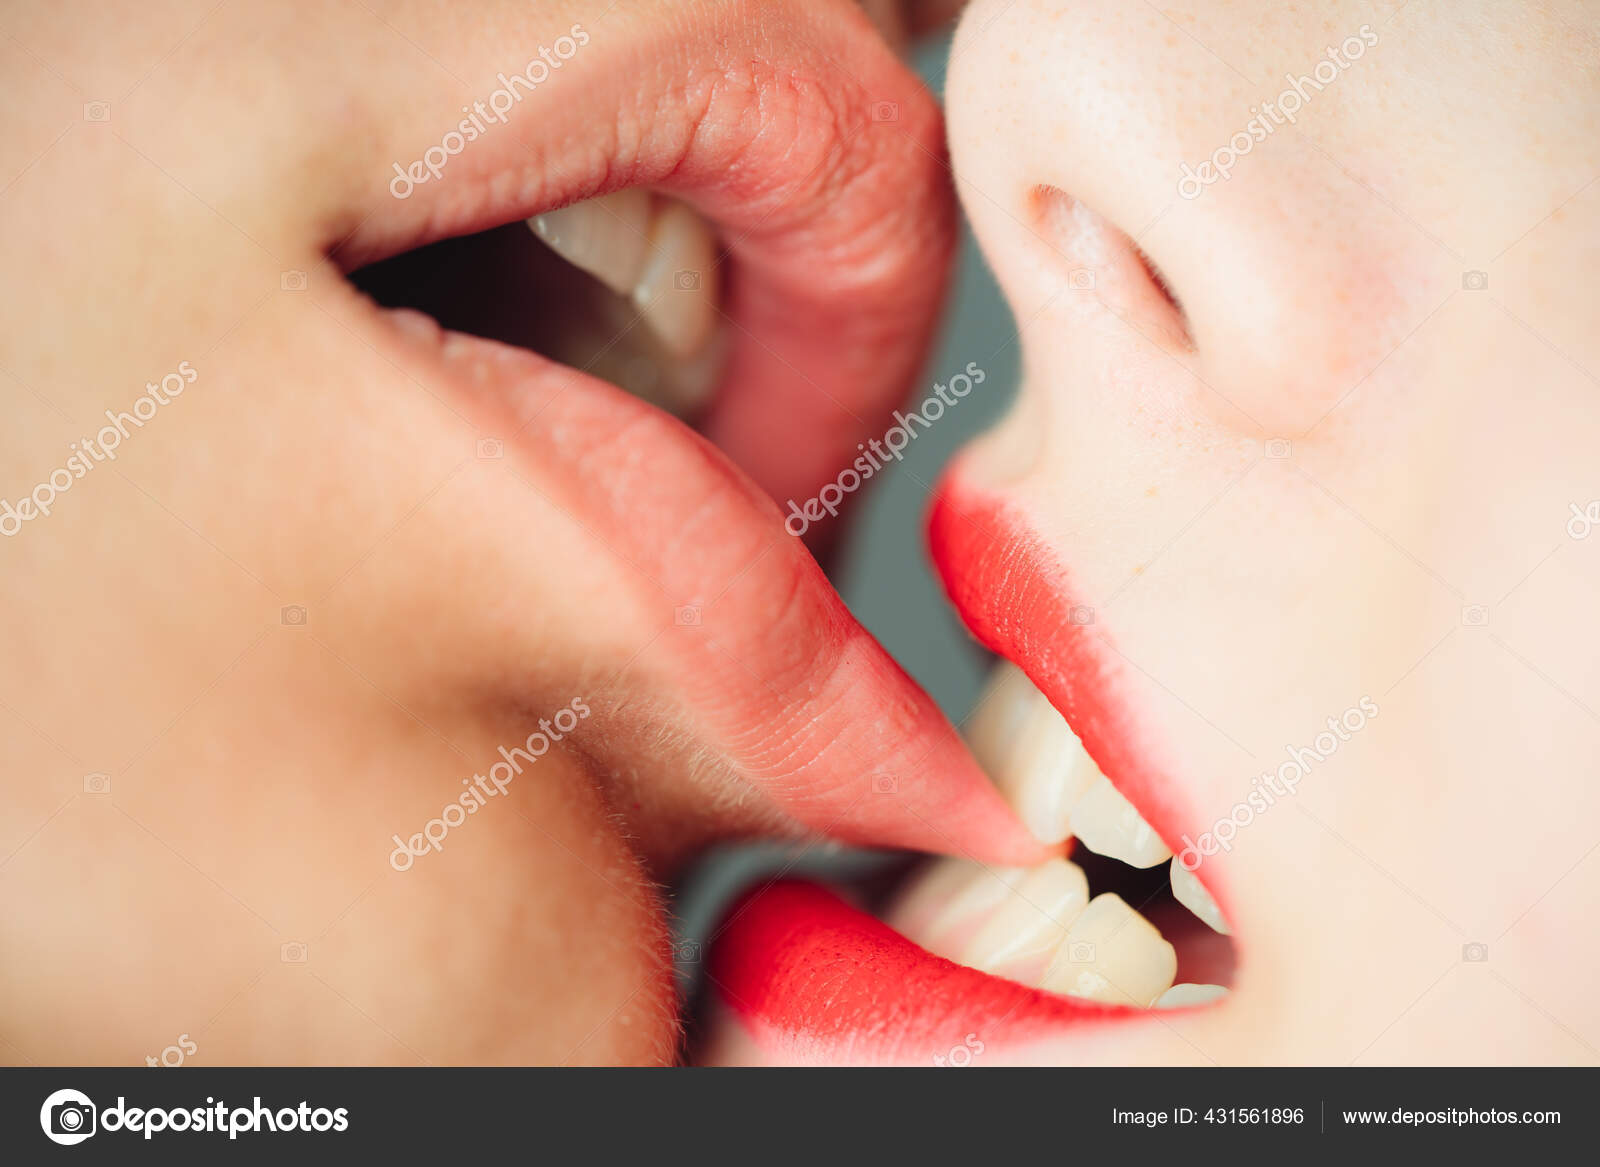 lesbians kissing up close hot photo